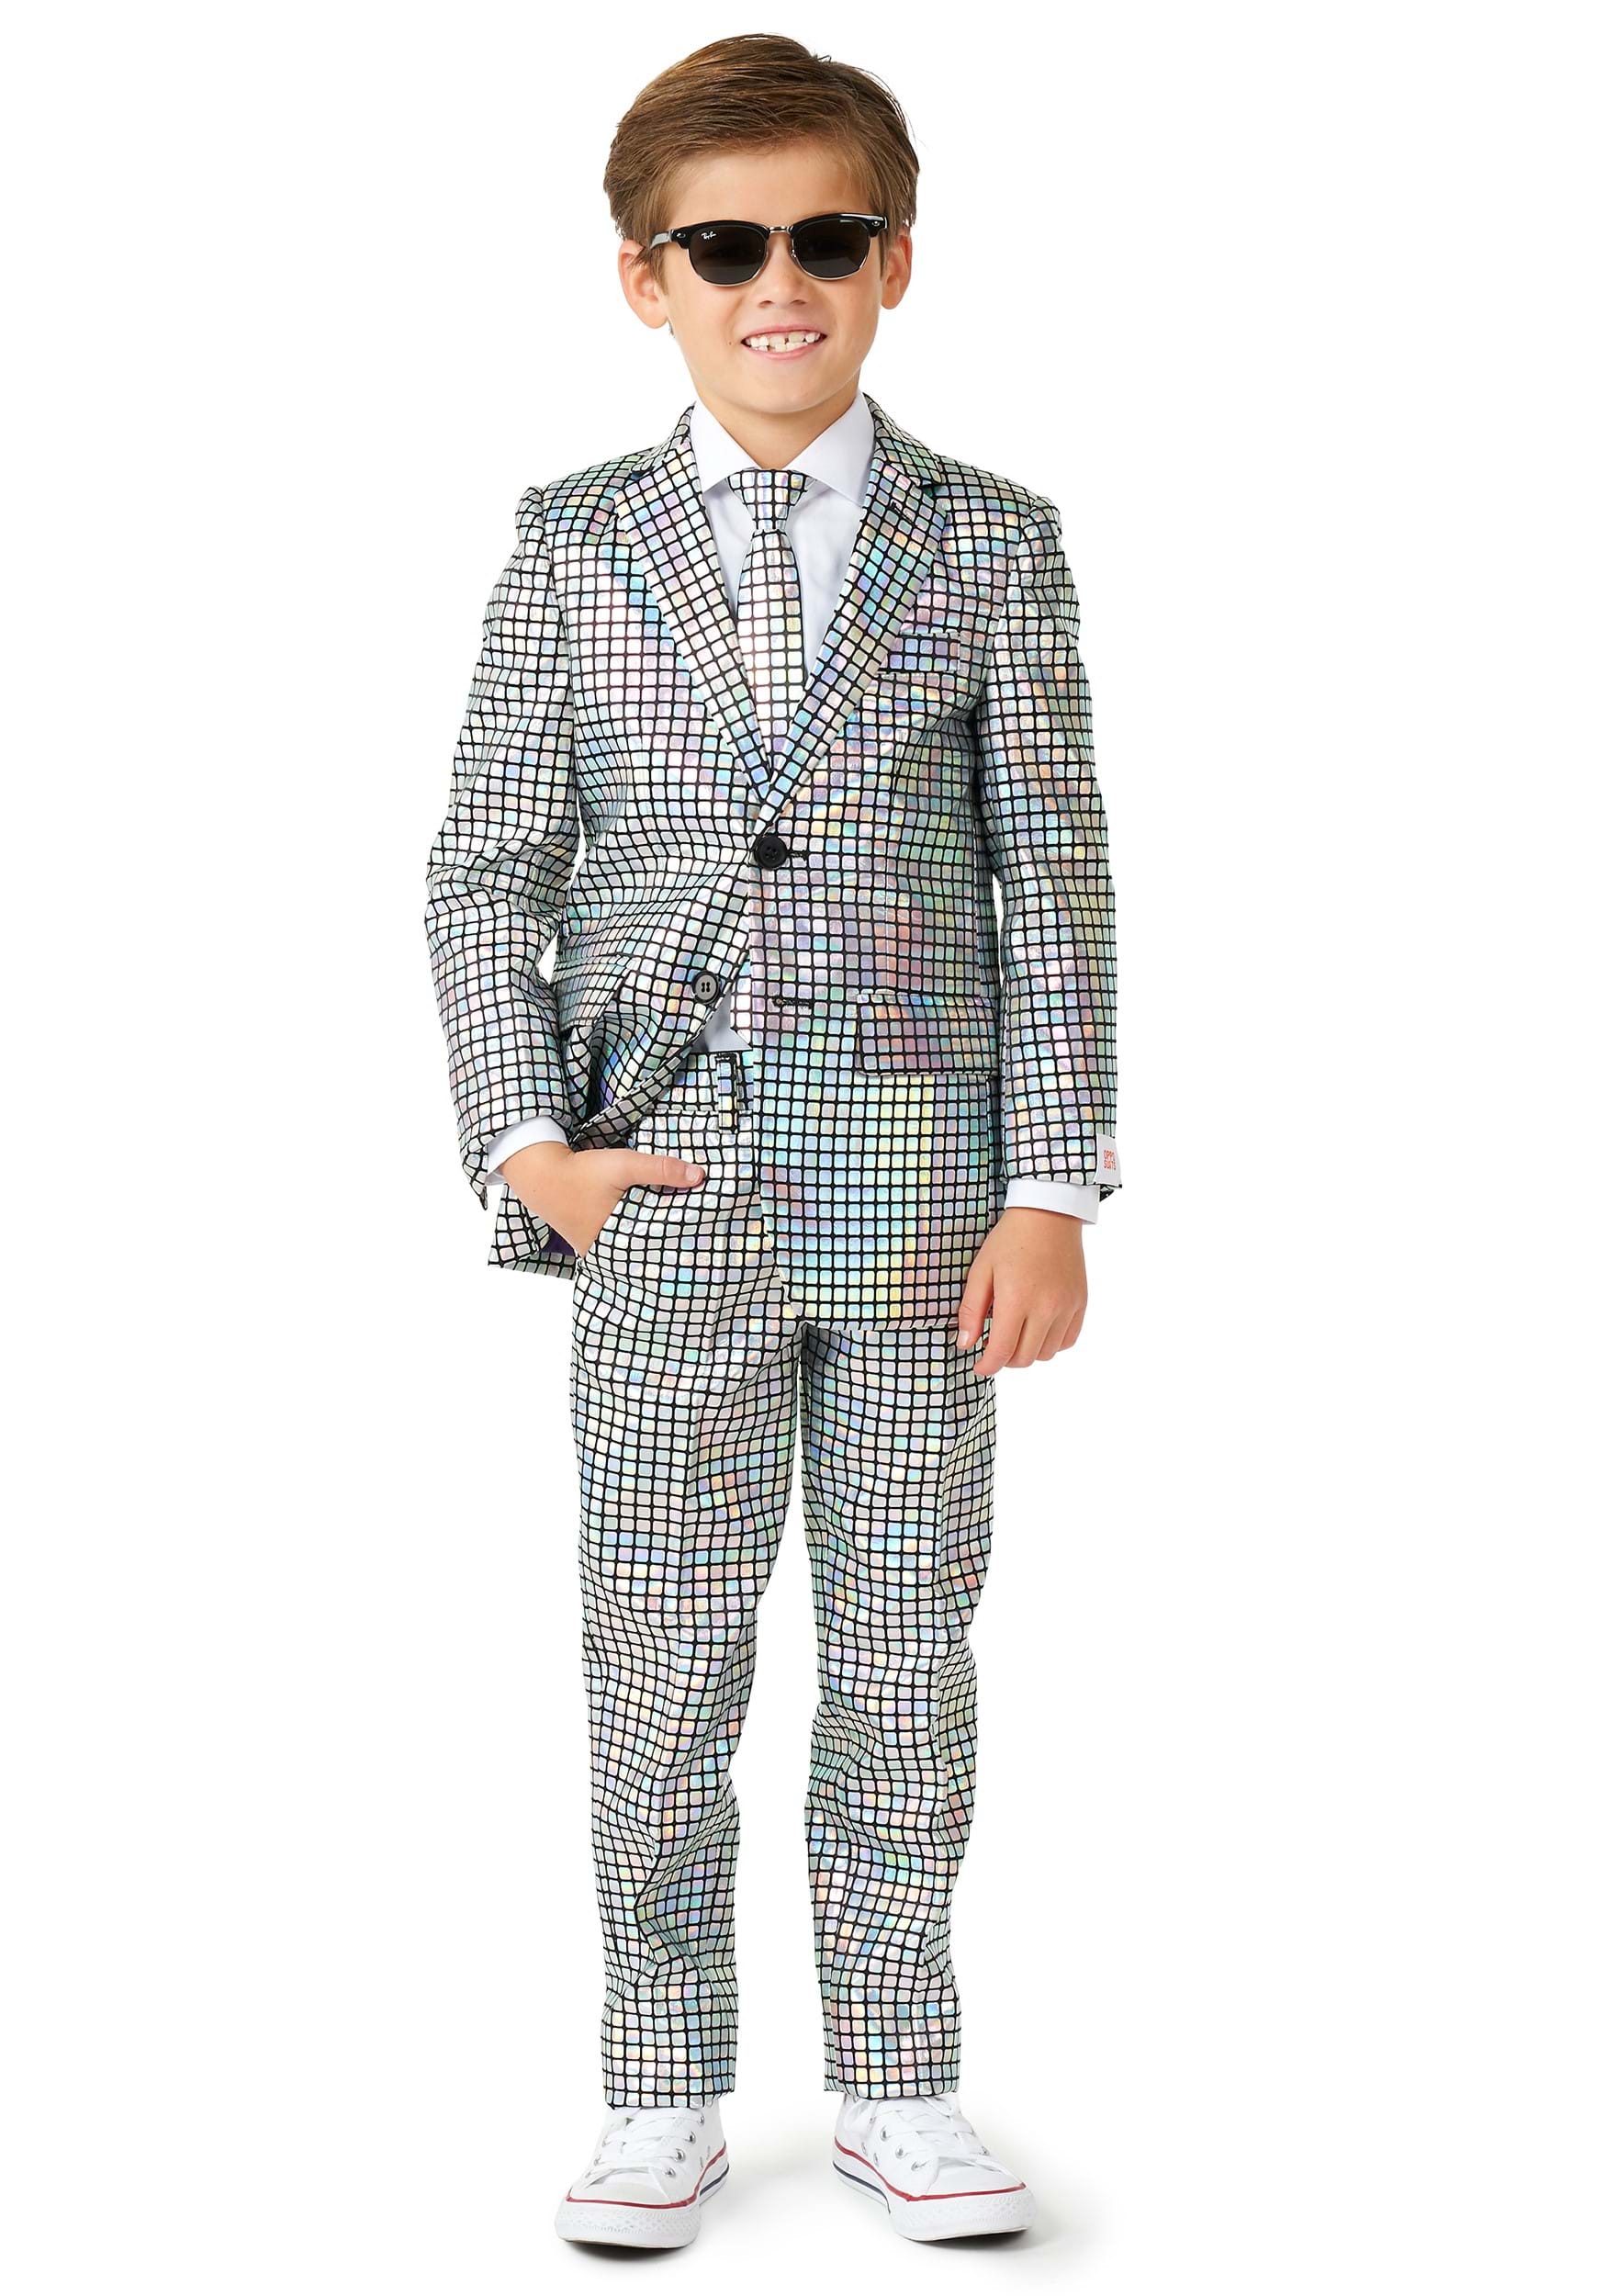 Opposuits Discoballer Boys Suit